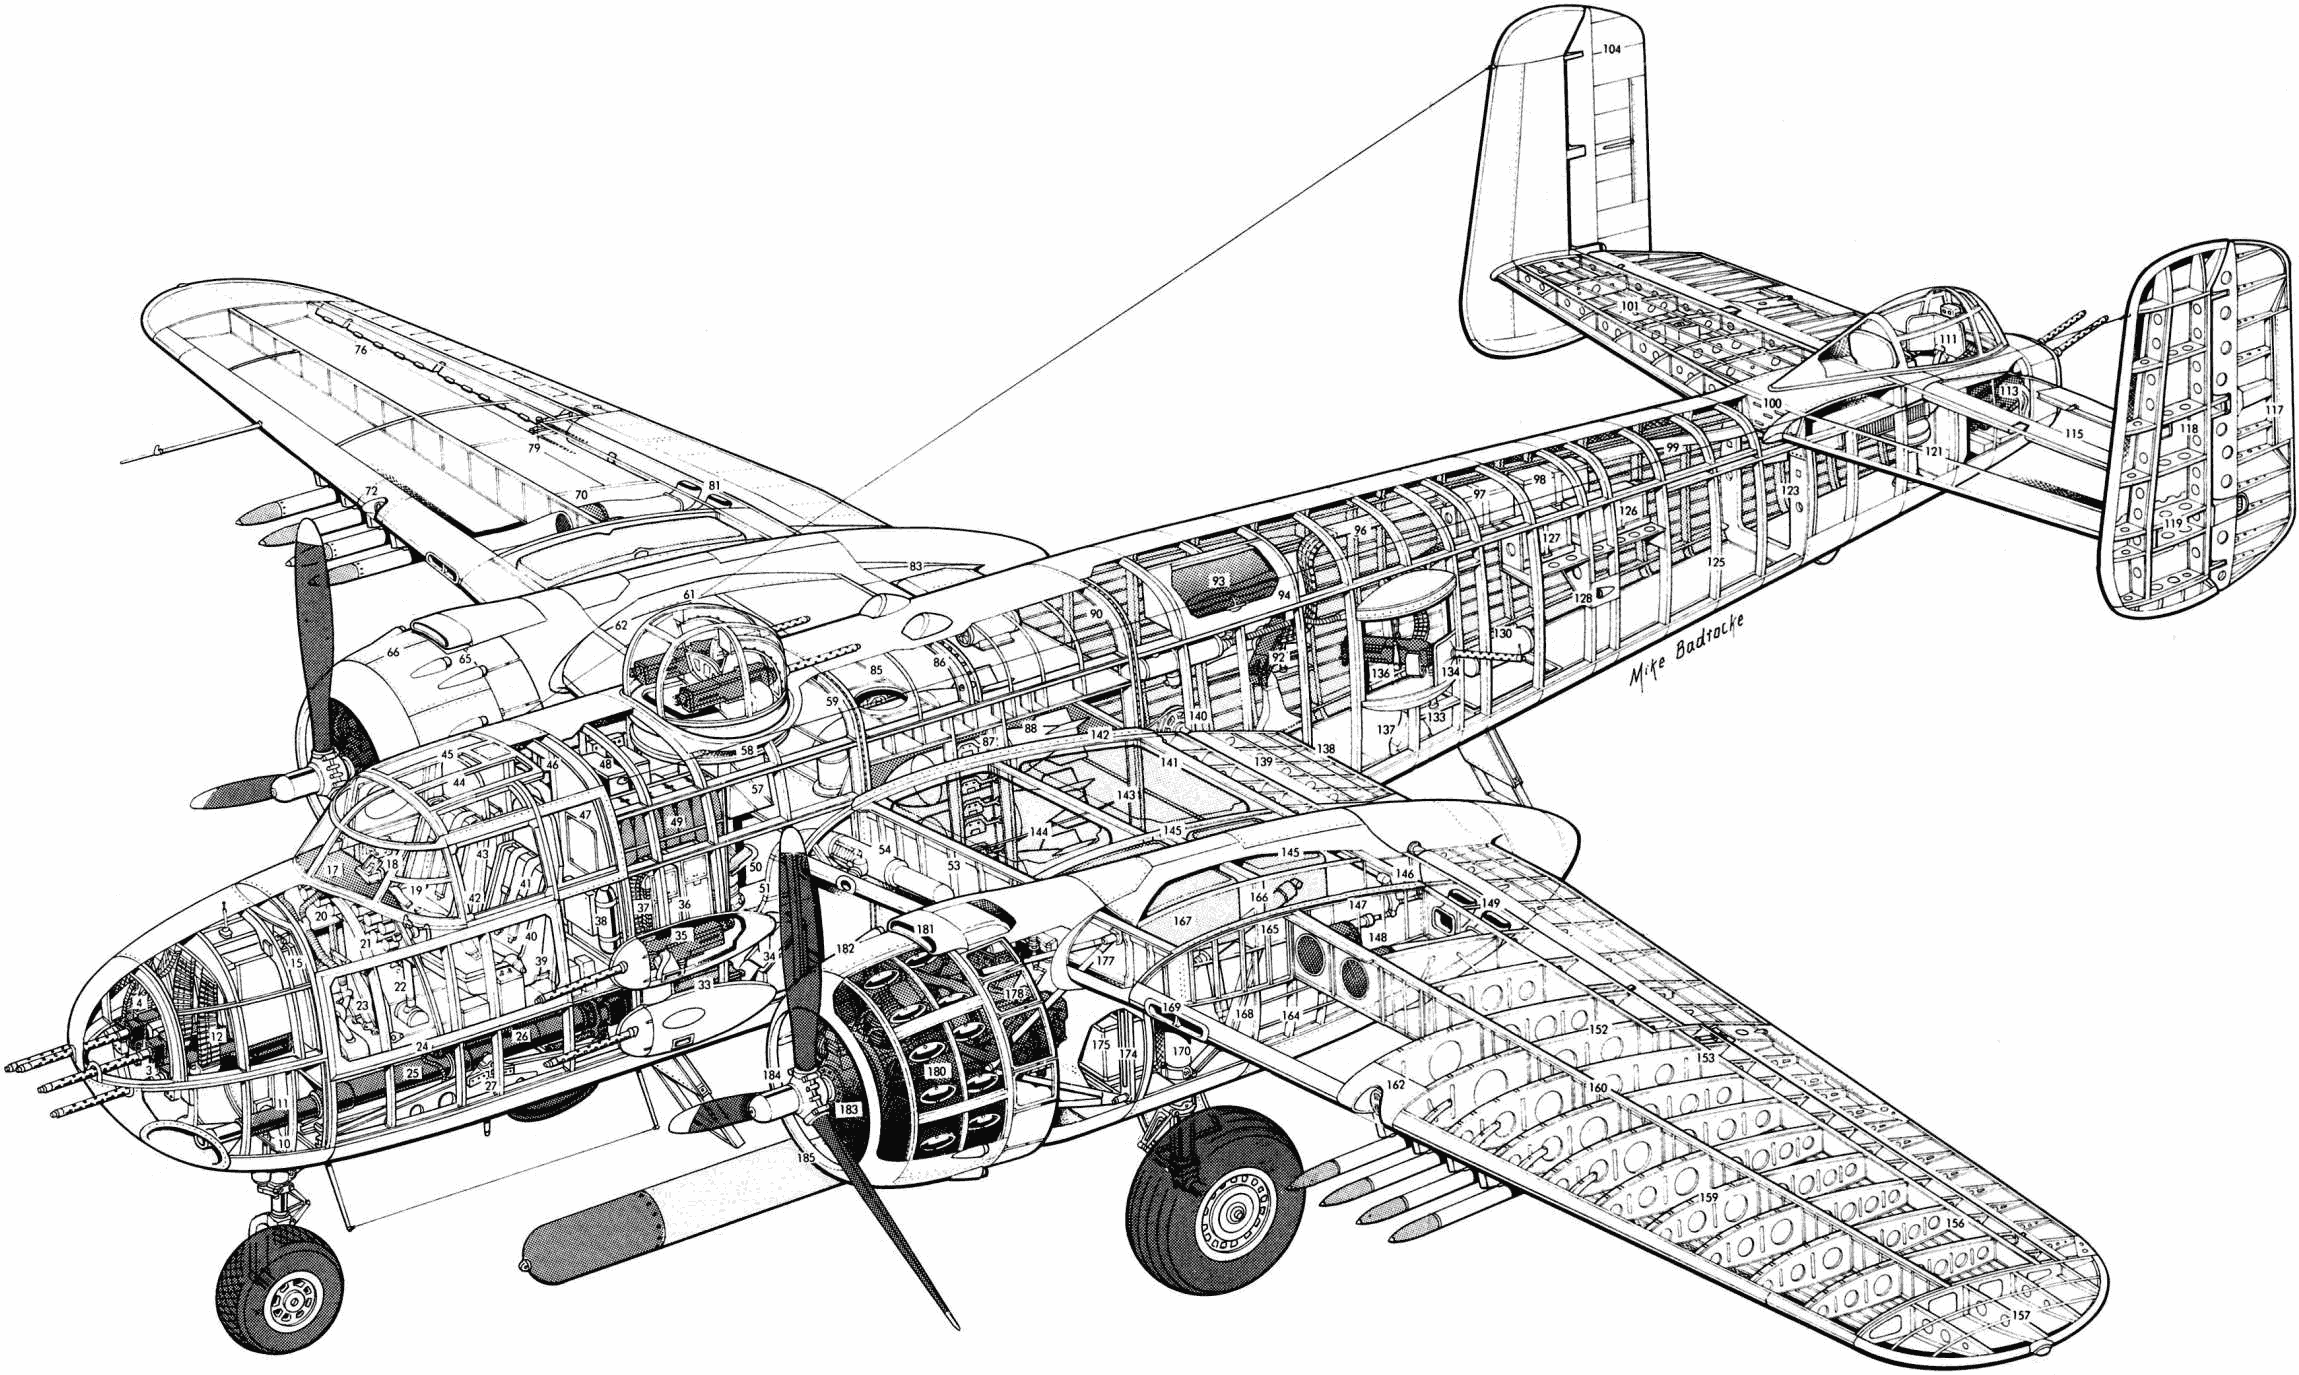 North american b-25 mitchell википедия